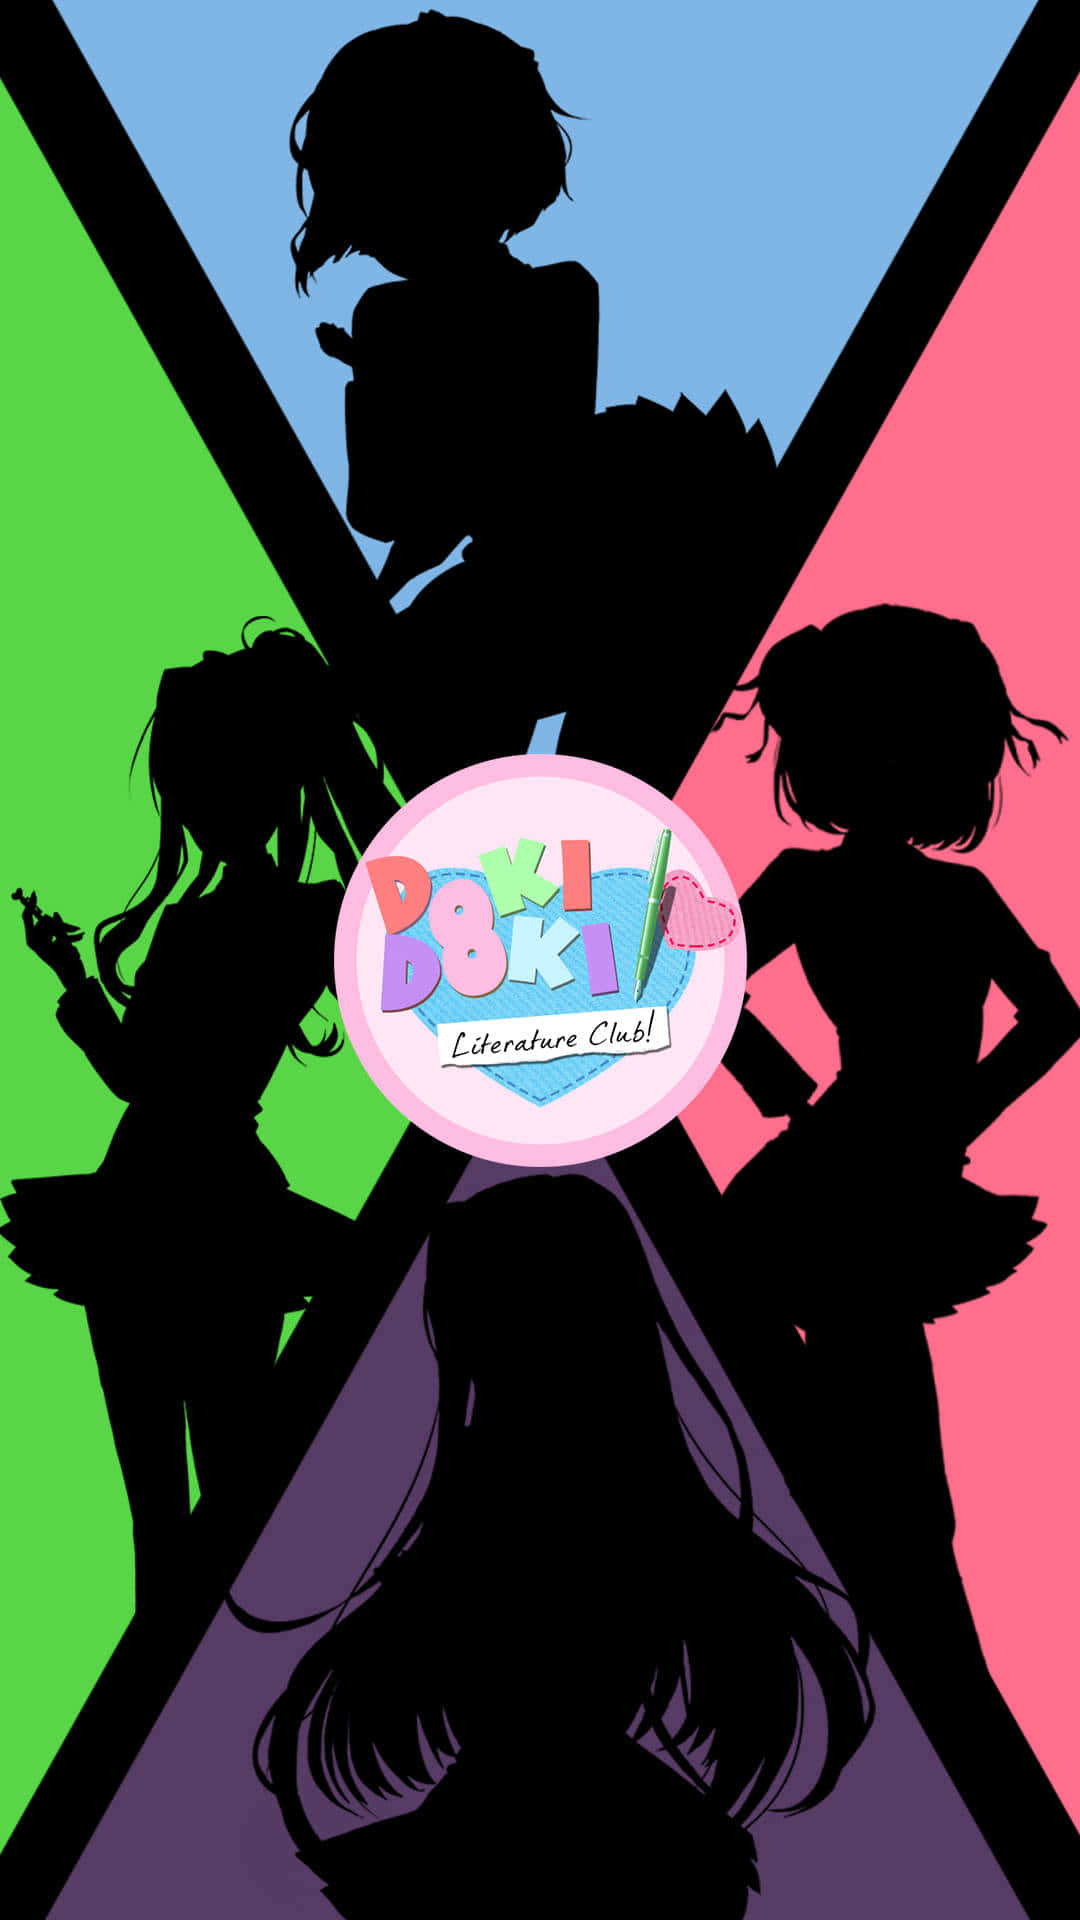 "Sayori, Monika, Natsuki, and Yuri - Embrace the Fun World of Ddlc!"